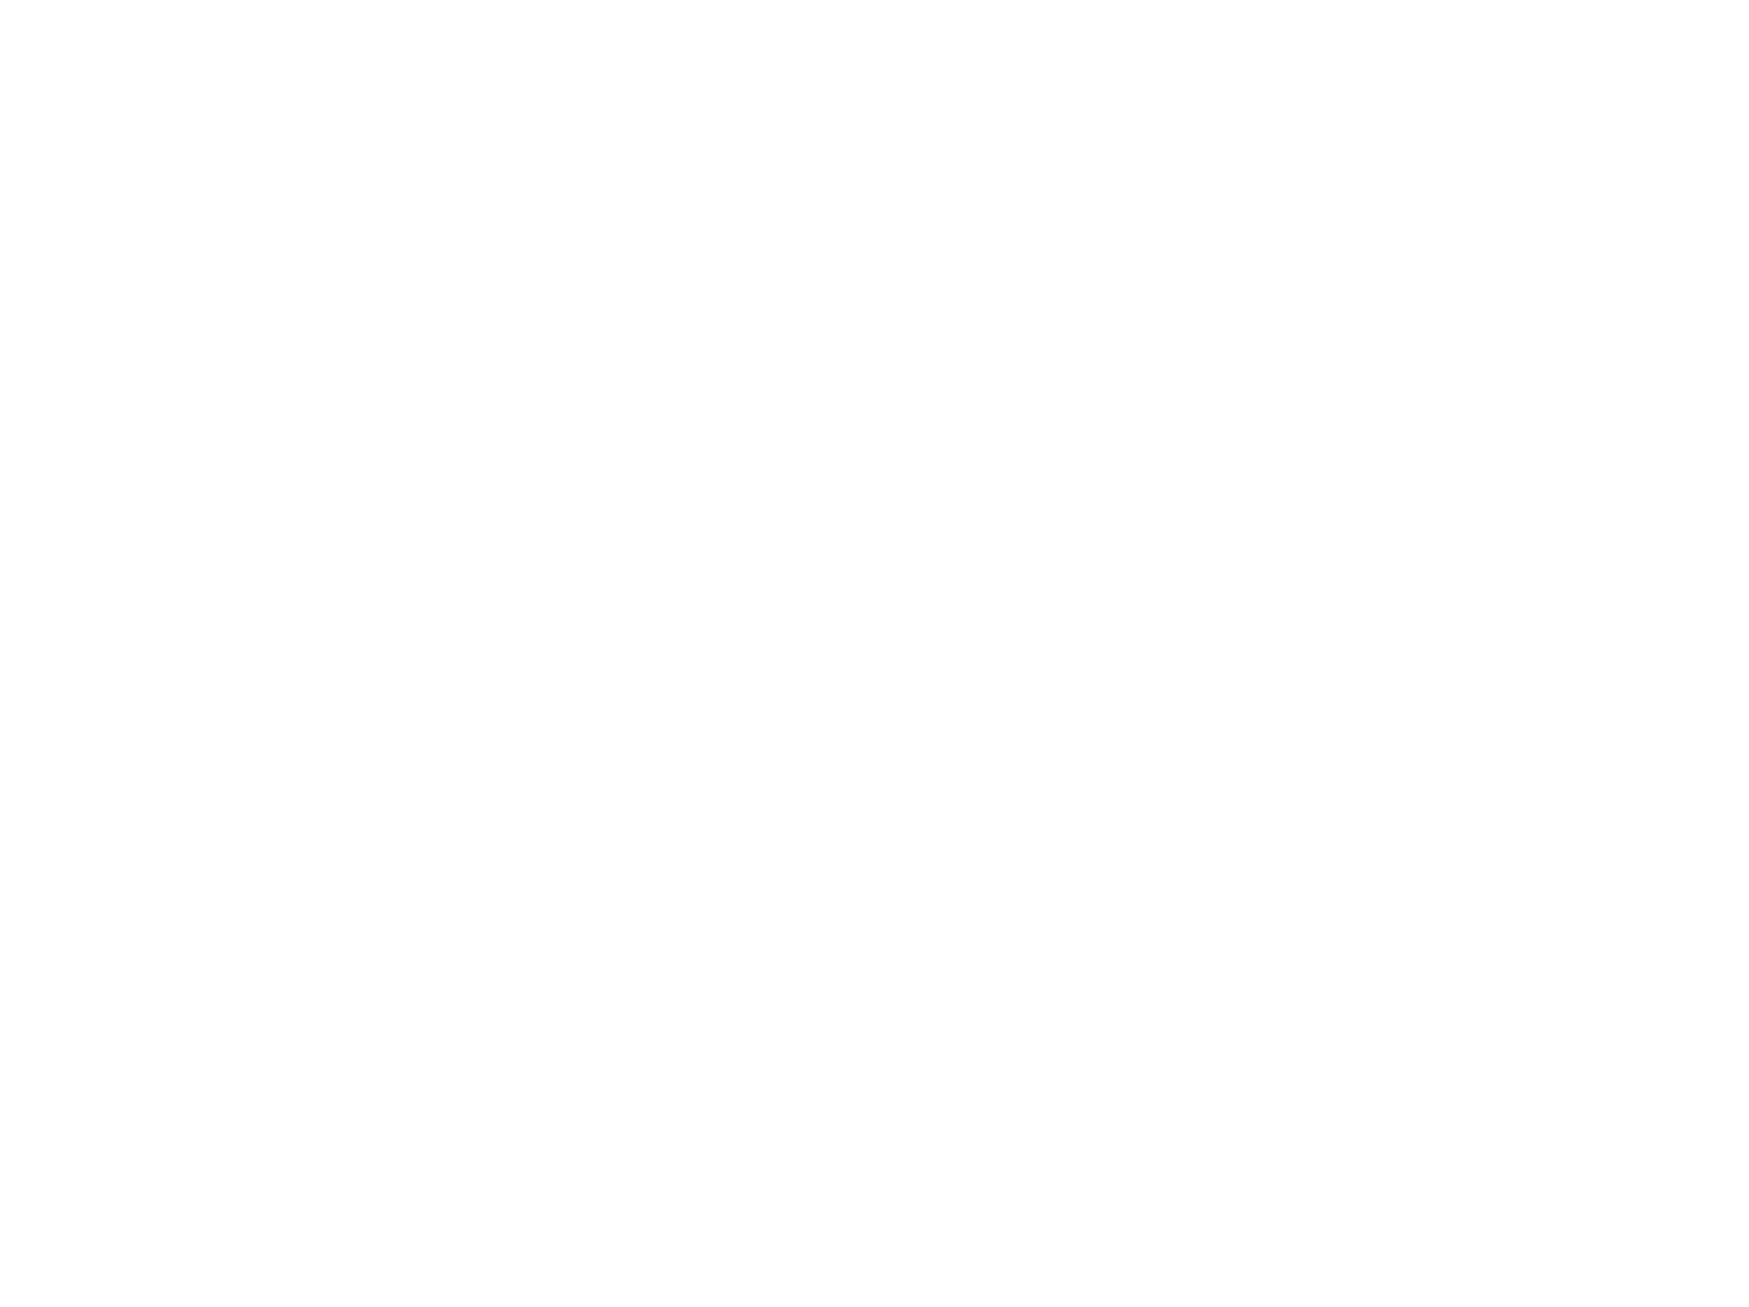 Michelangelo's Sistine Chapel: Los Angeles Exhibit